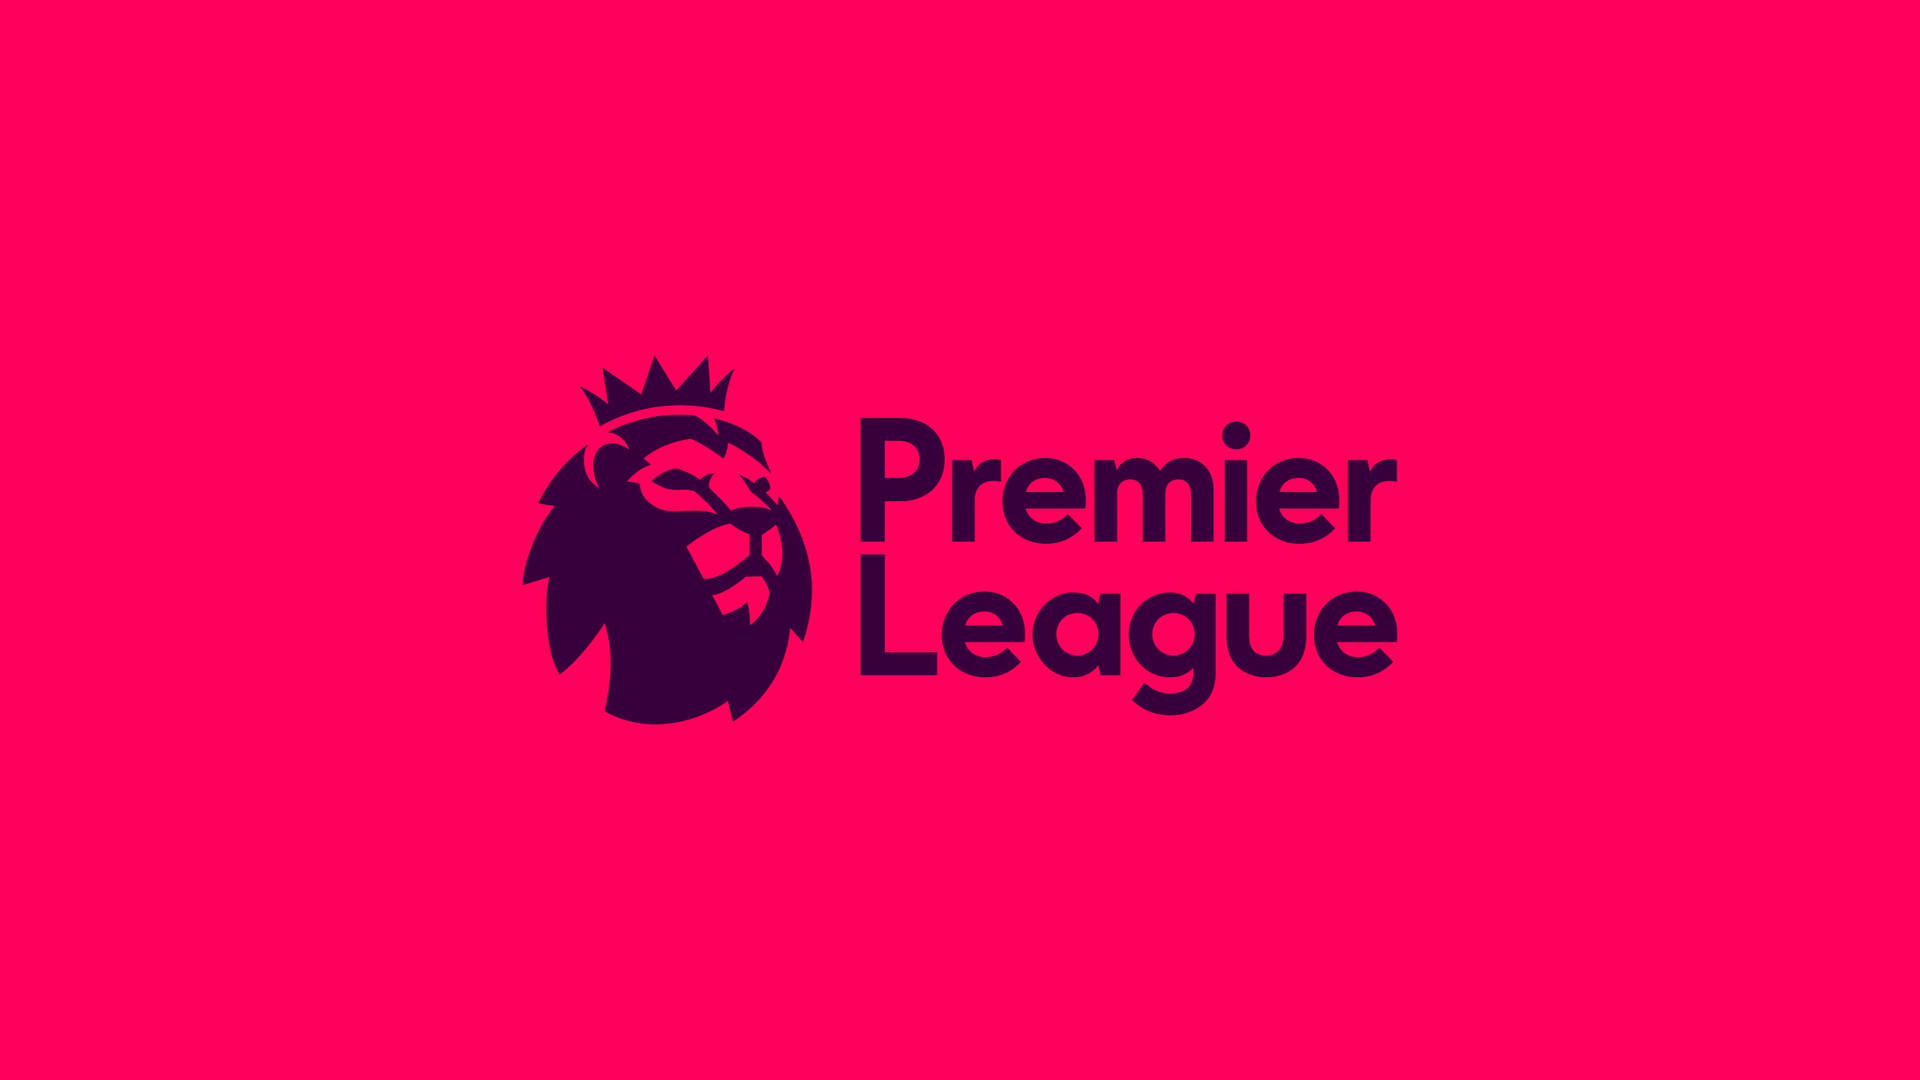 Premier League In Dark Pink